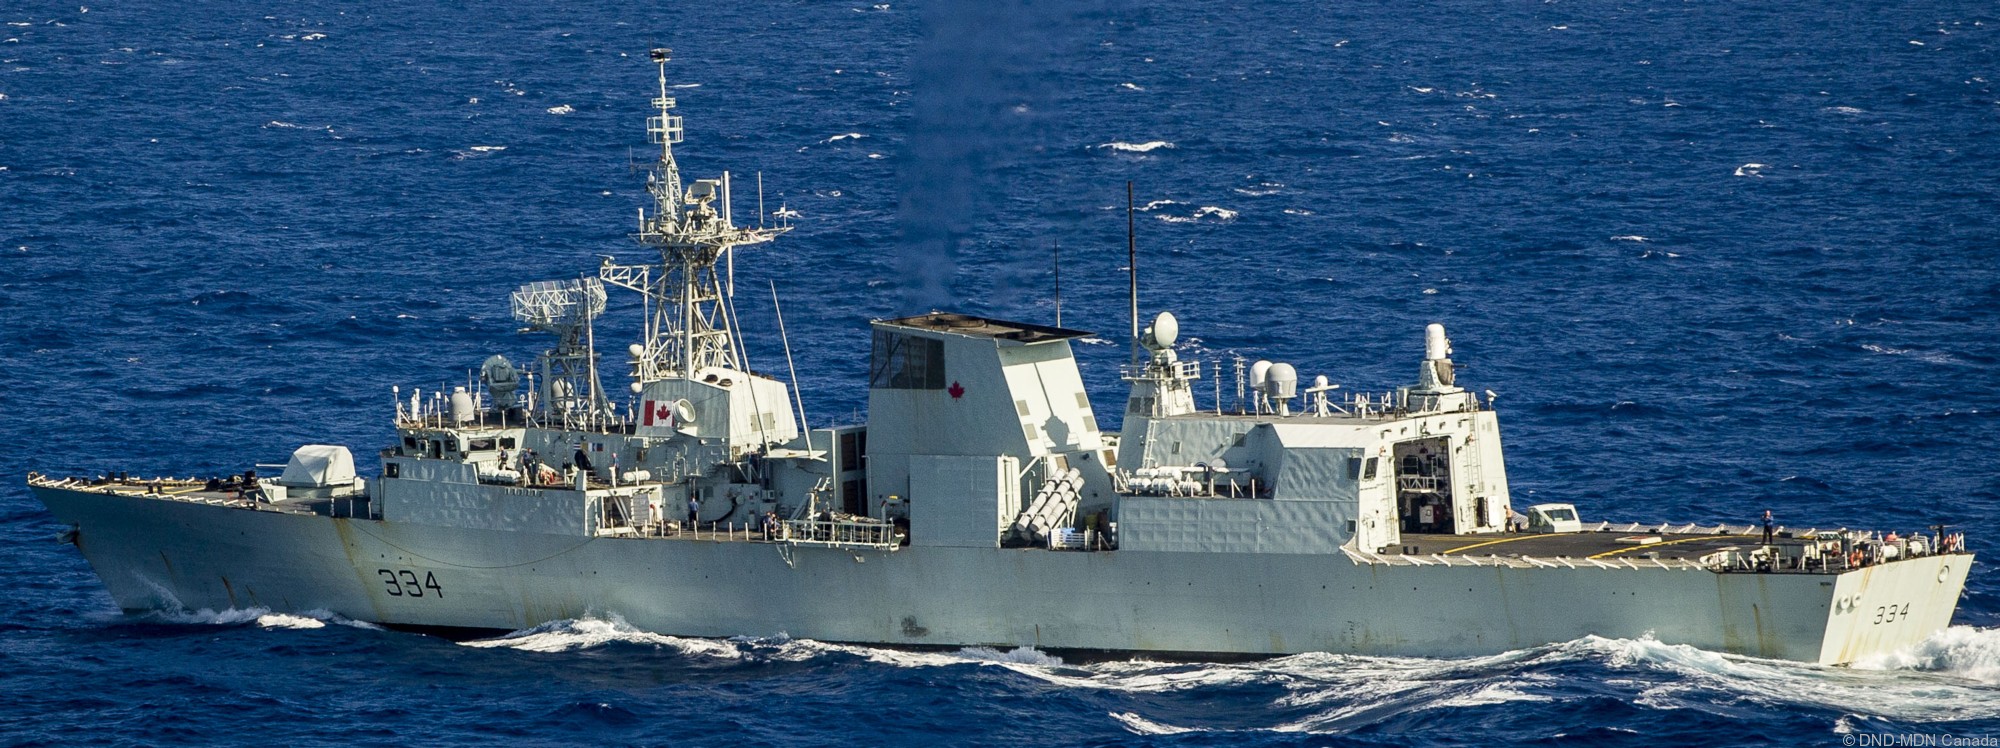 ffh-334 hmcs regina halifax class helicopter patrol frigate ncsm royal canadian navy 73